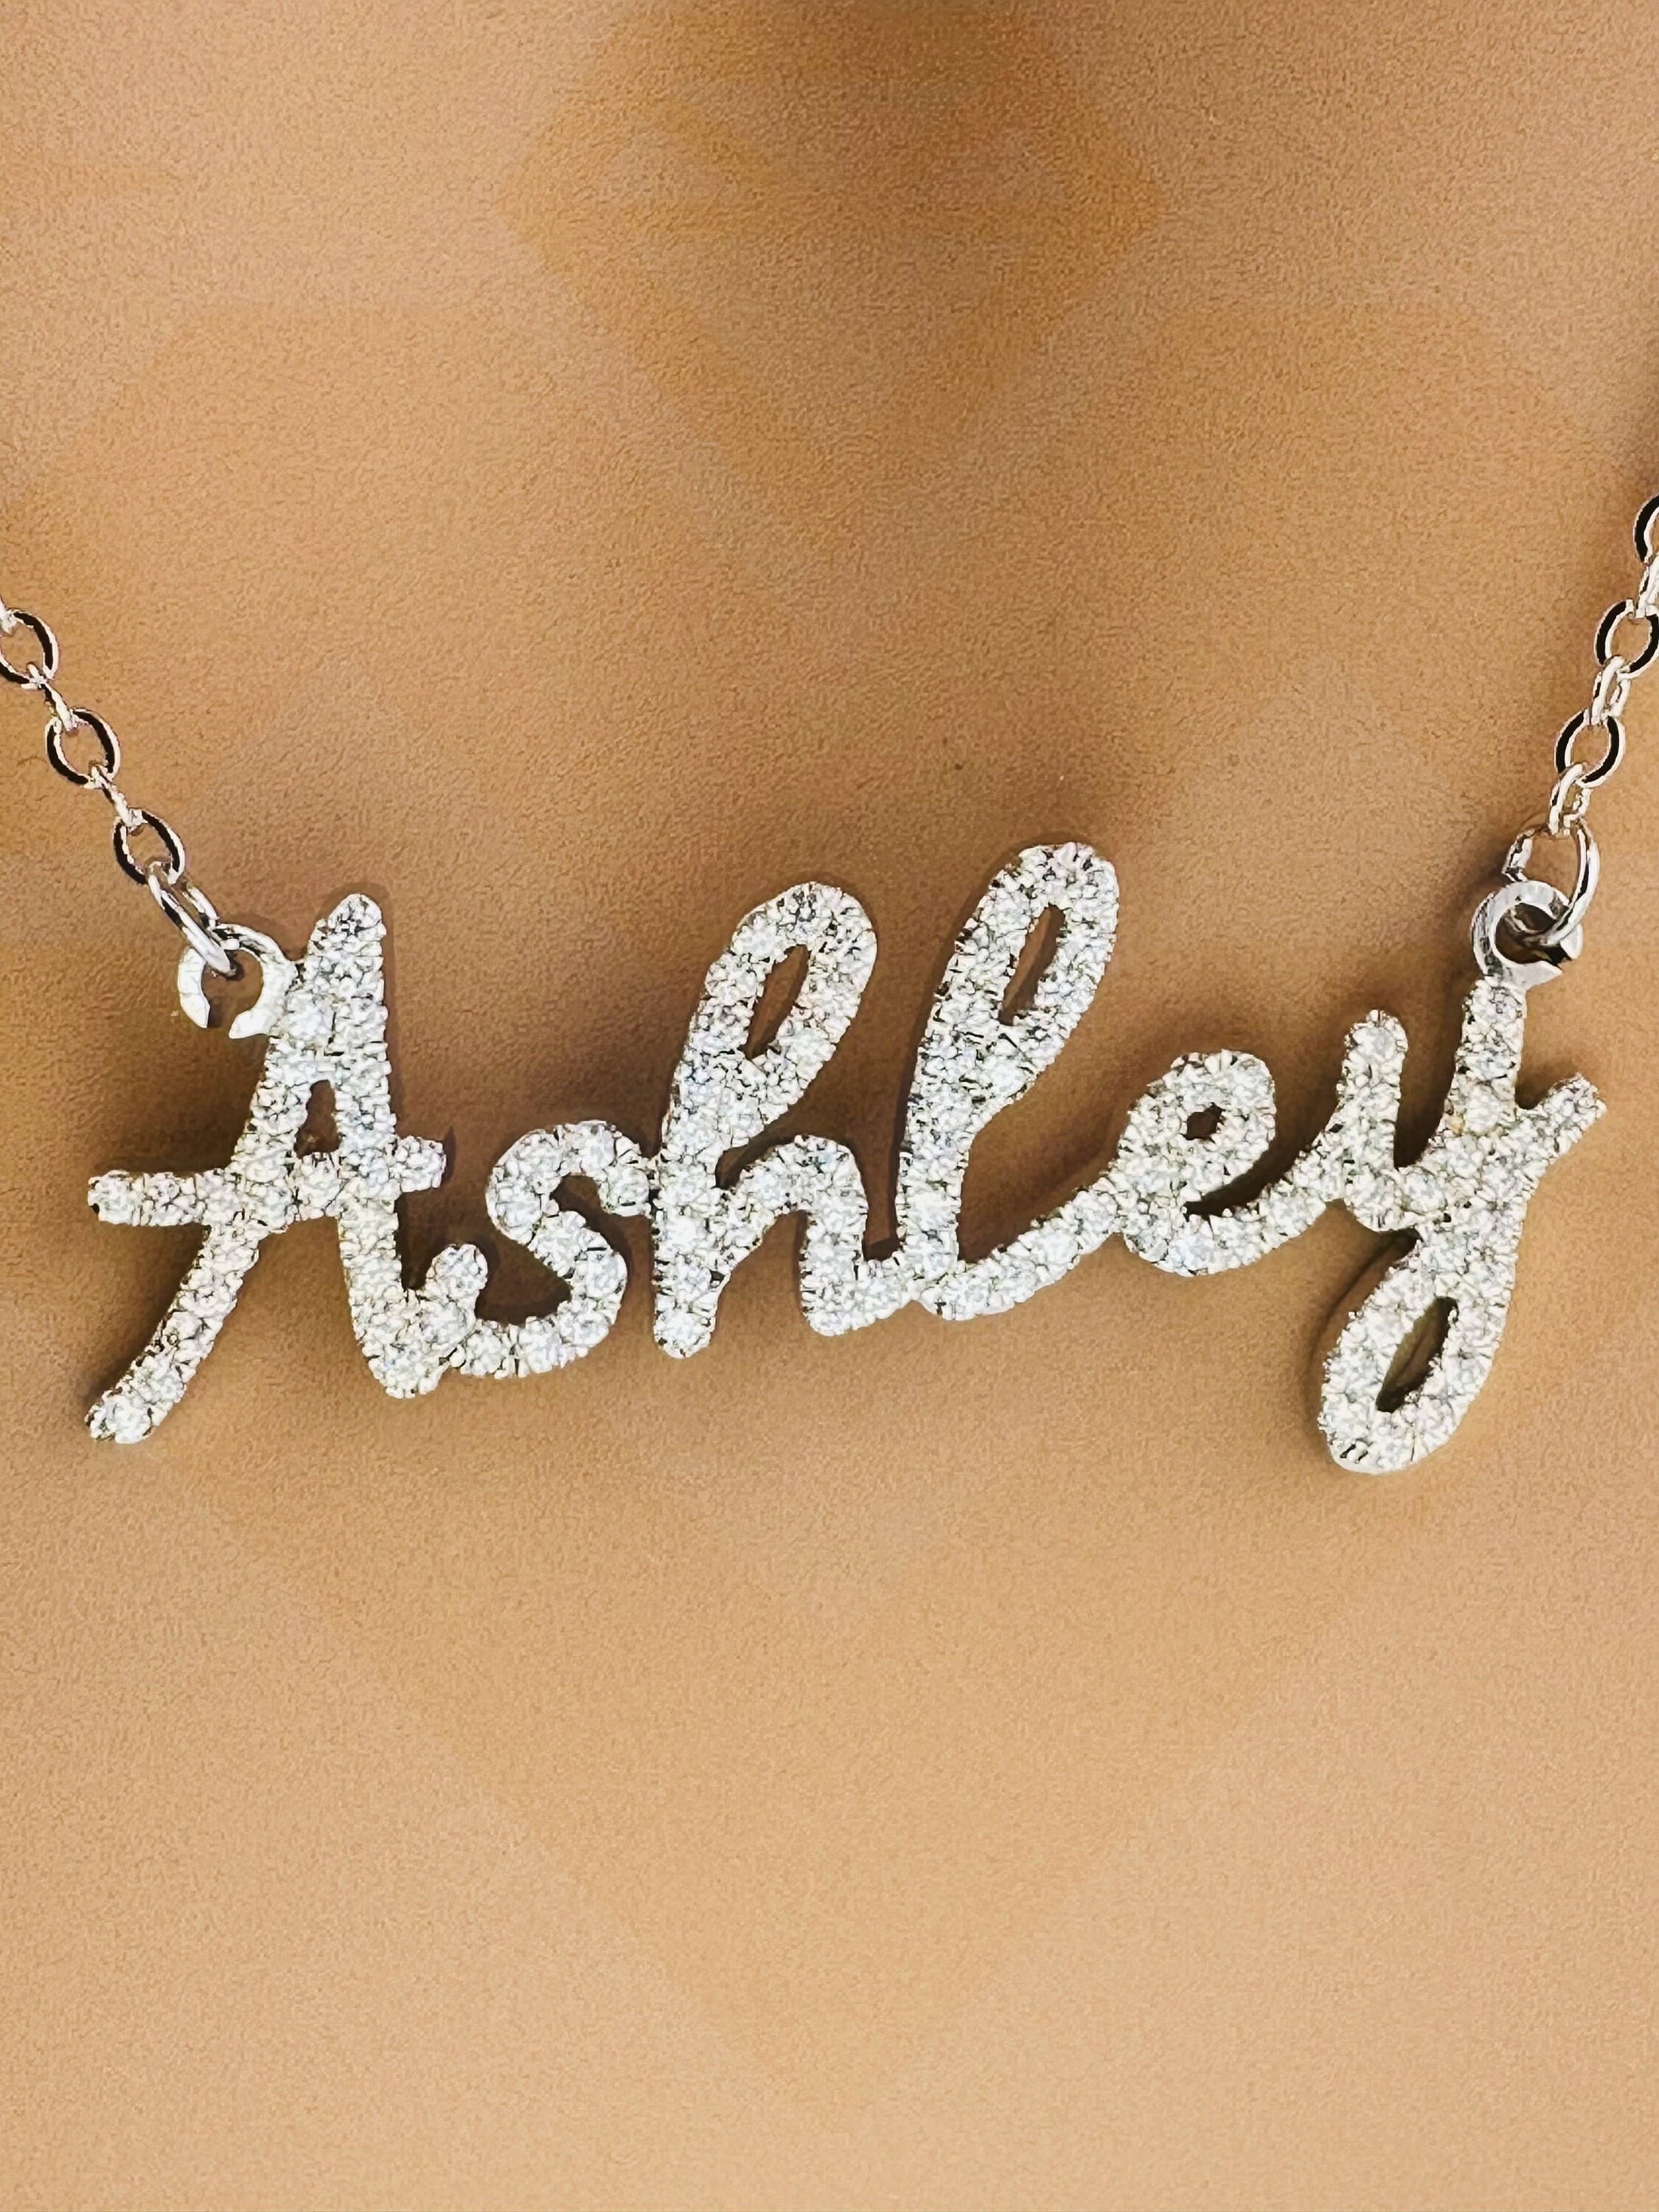 10k White Gold Vermeil Simulated Diamond Ashely name pendant, personalized name pendant, custom Name plate jewelry, Birthday, Anniversary